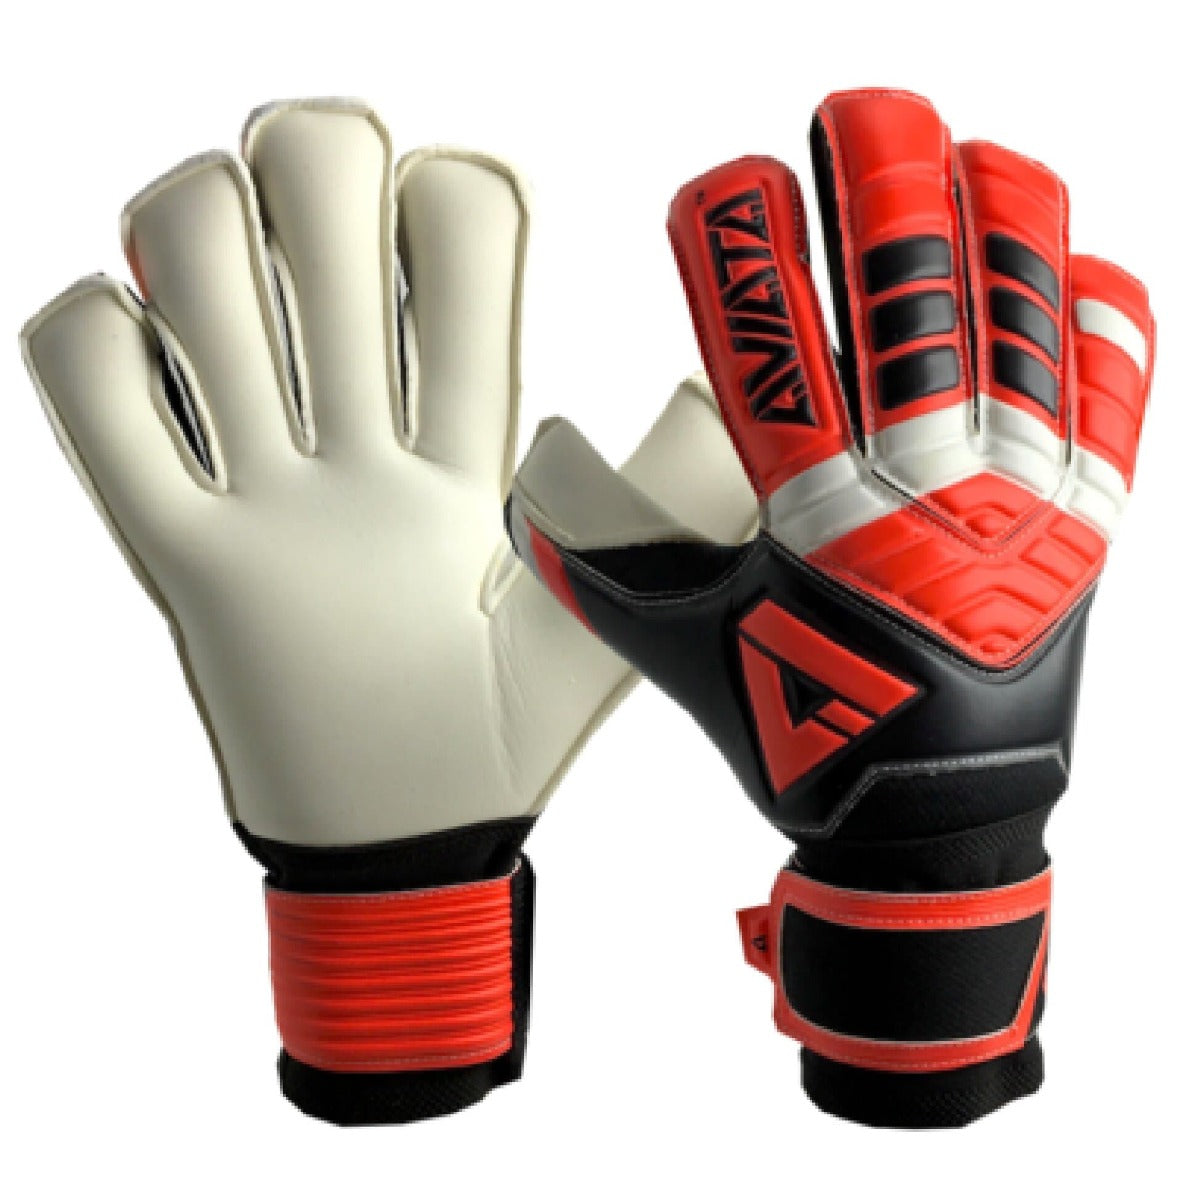 Aviata Light Bright Club Solar Shield Goalkeeper Gloves - Red-Black-White (Pair)